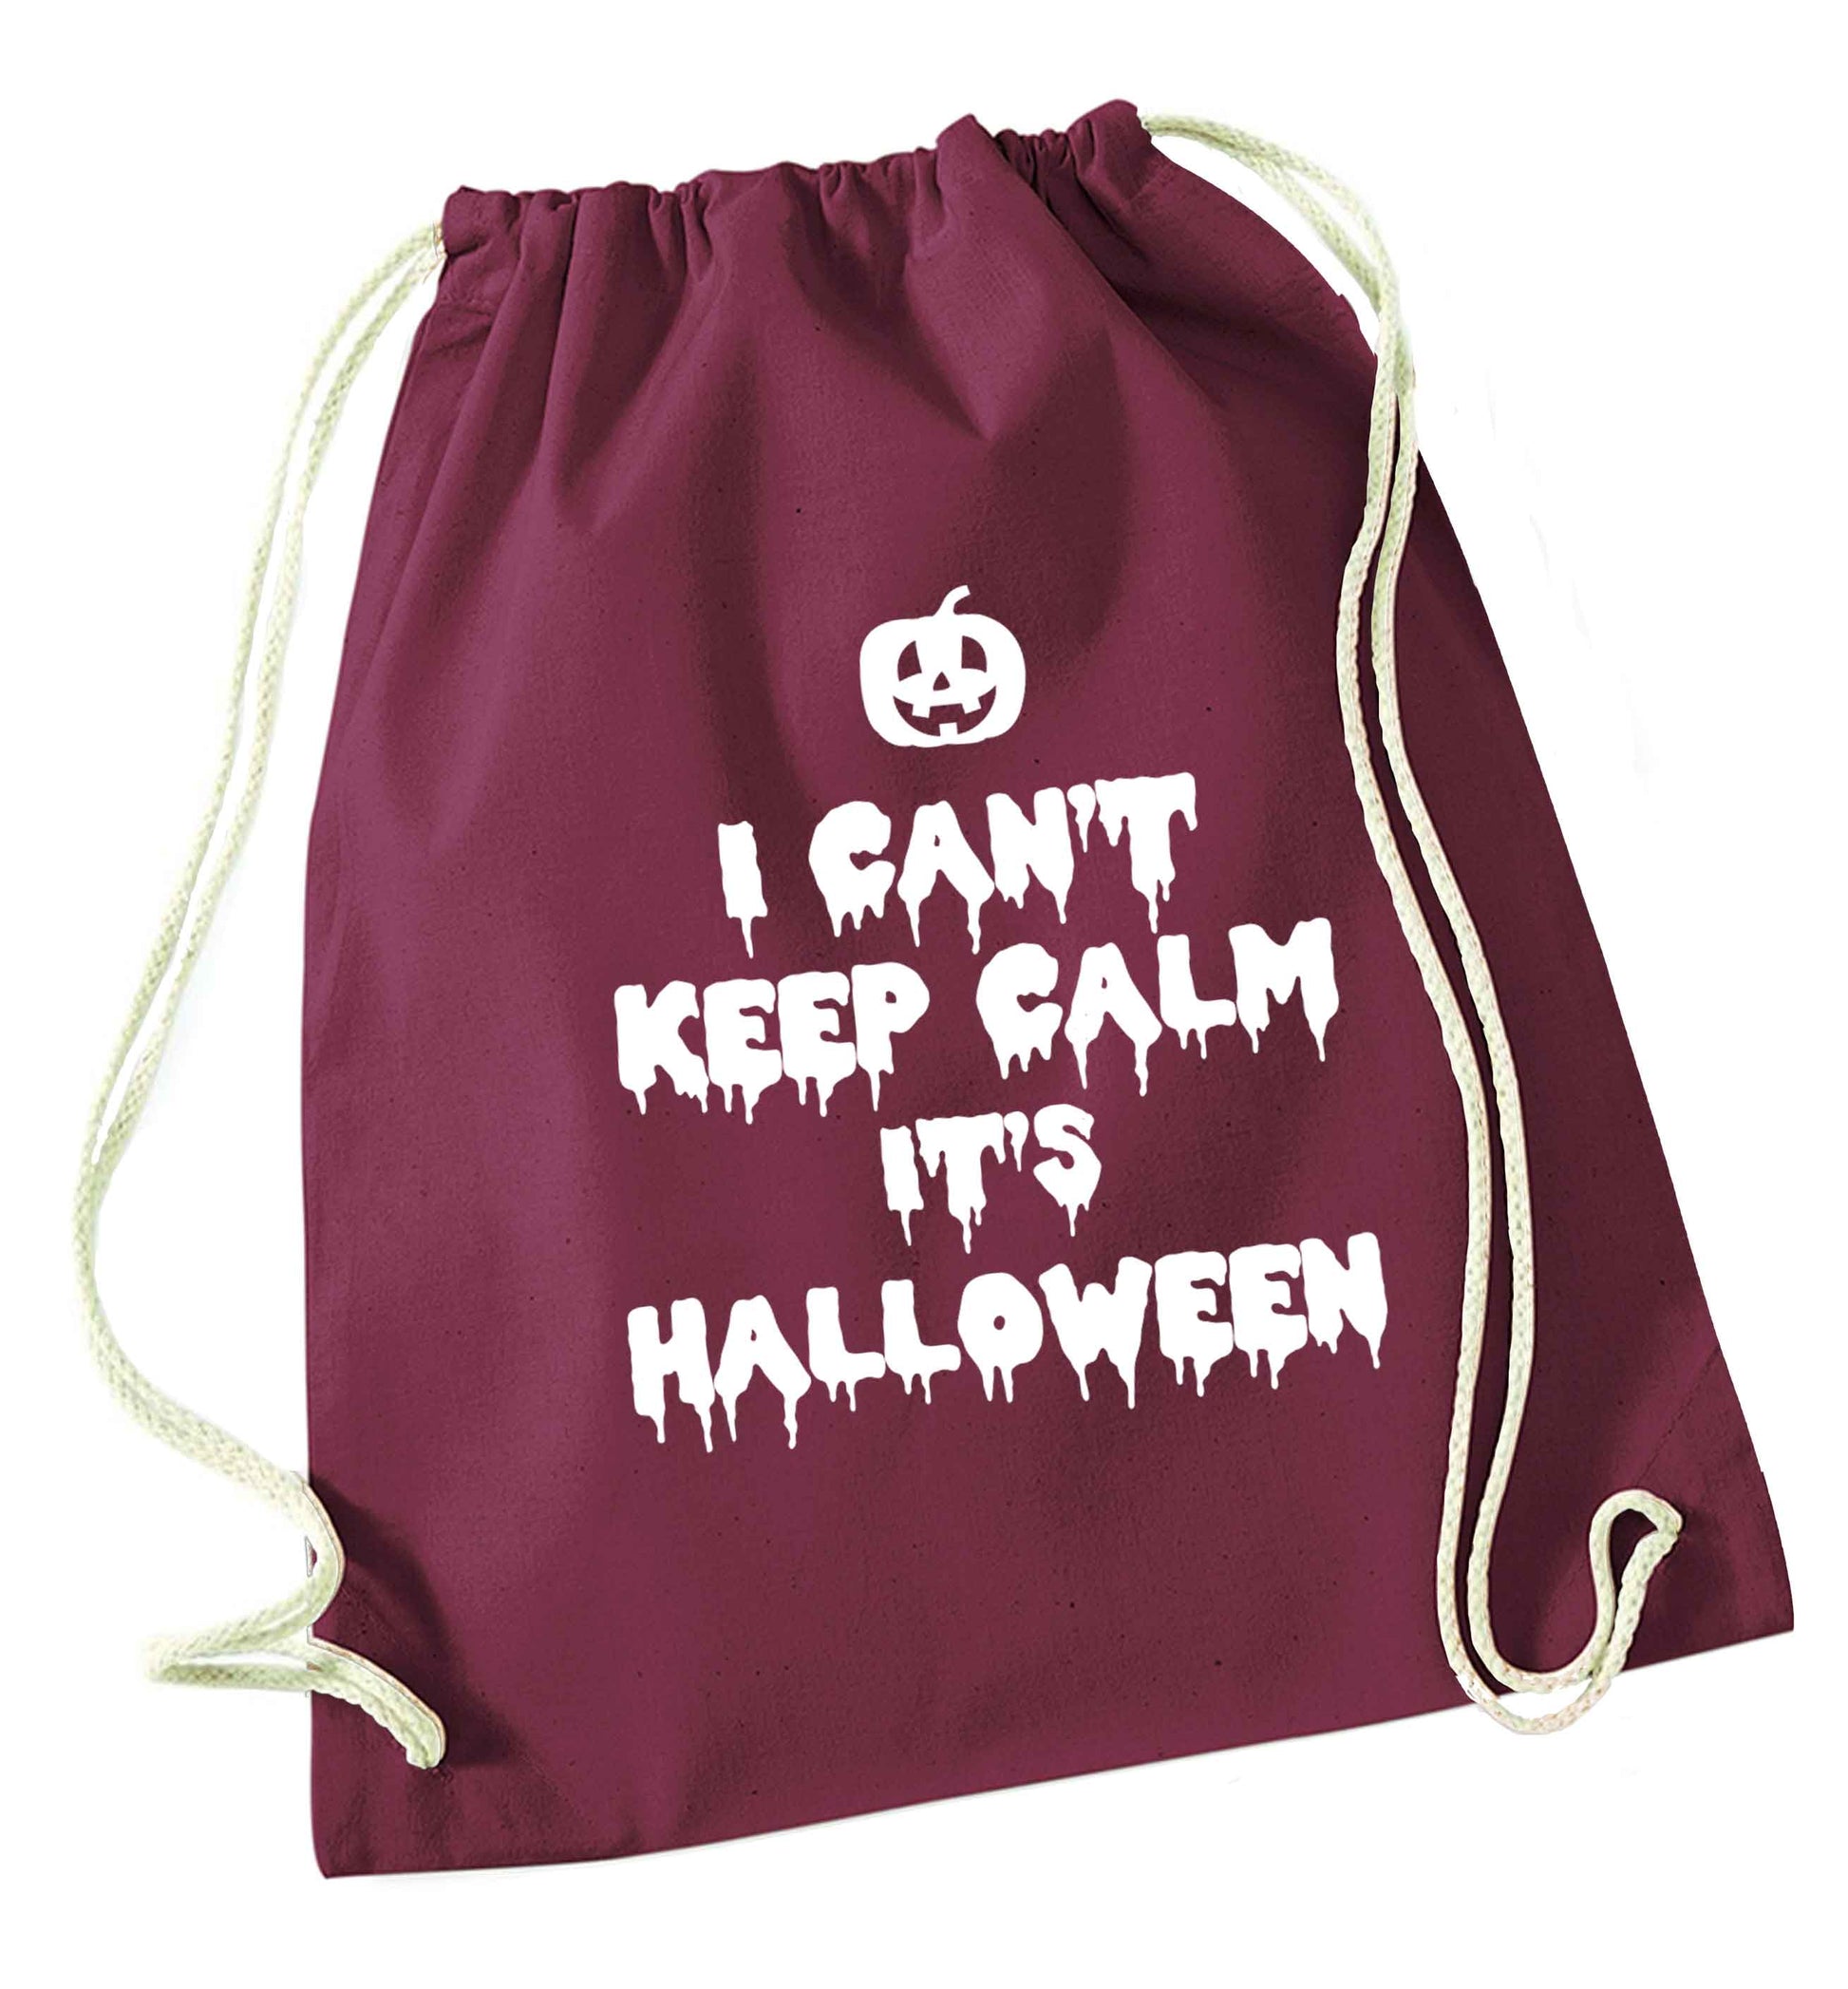 I can't keep calm it's halloween maroon drawstring bag